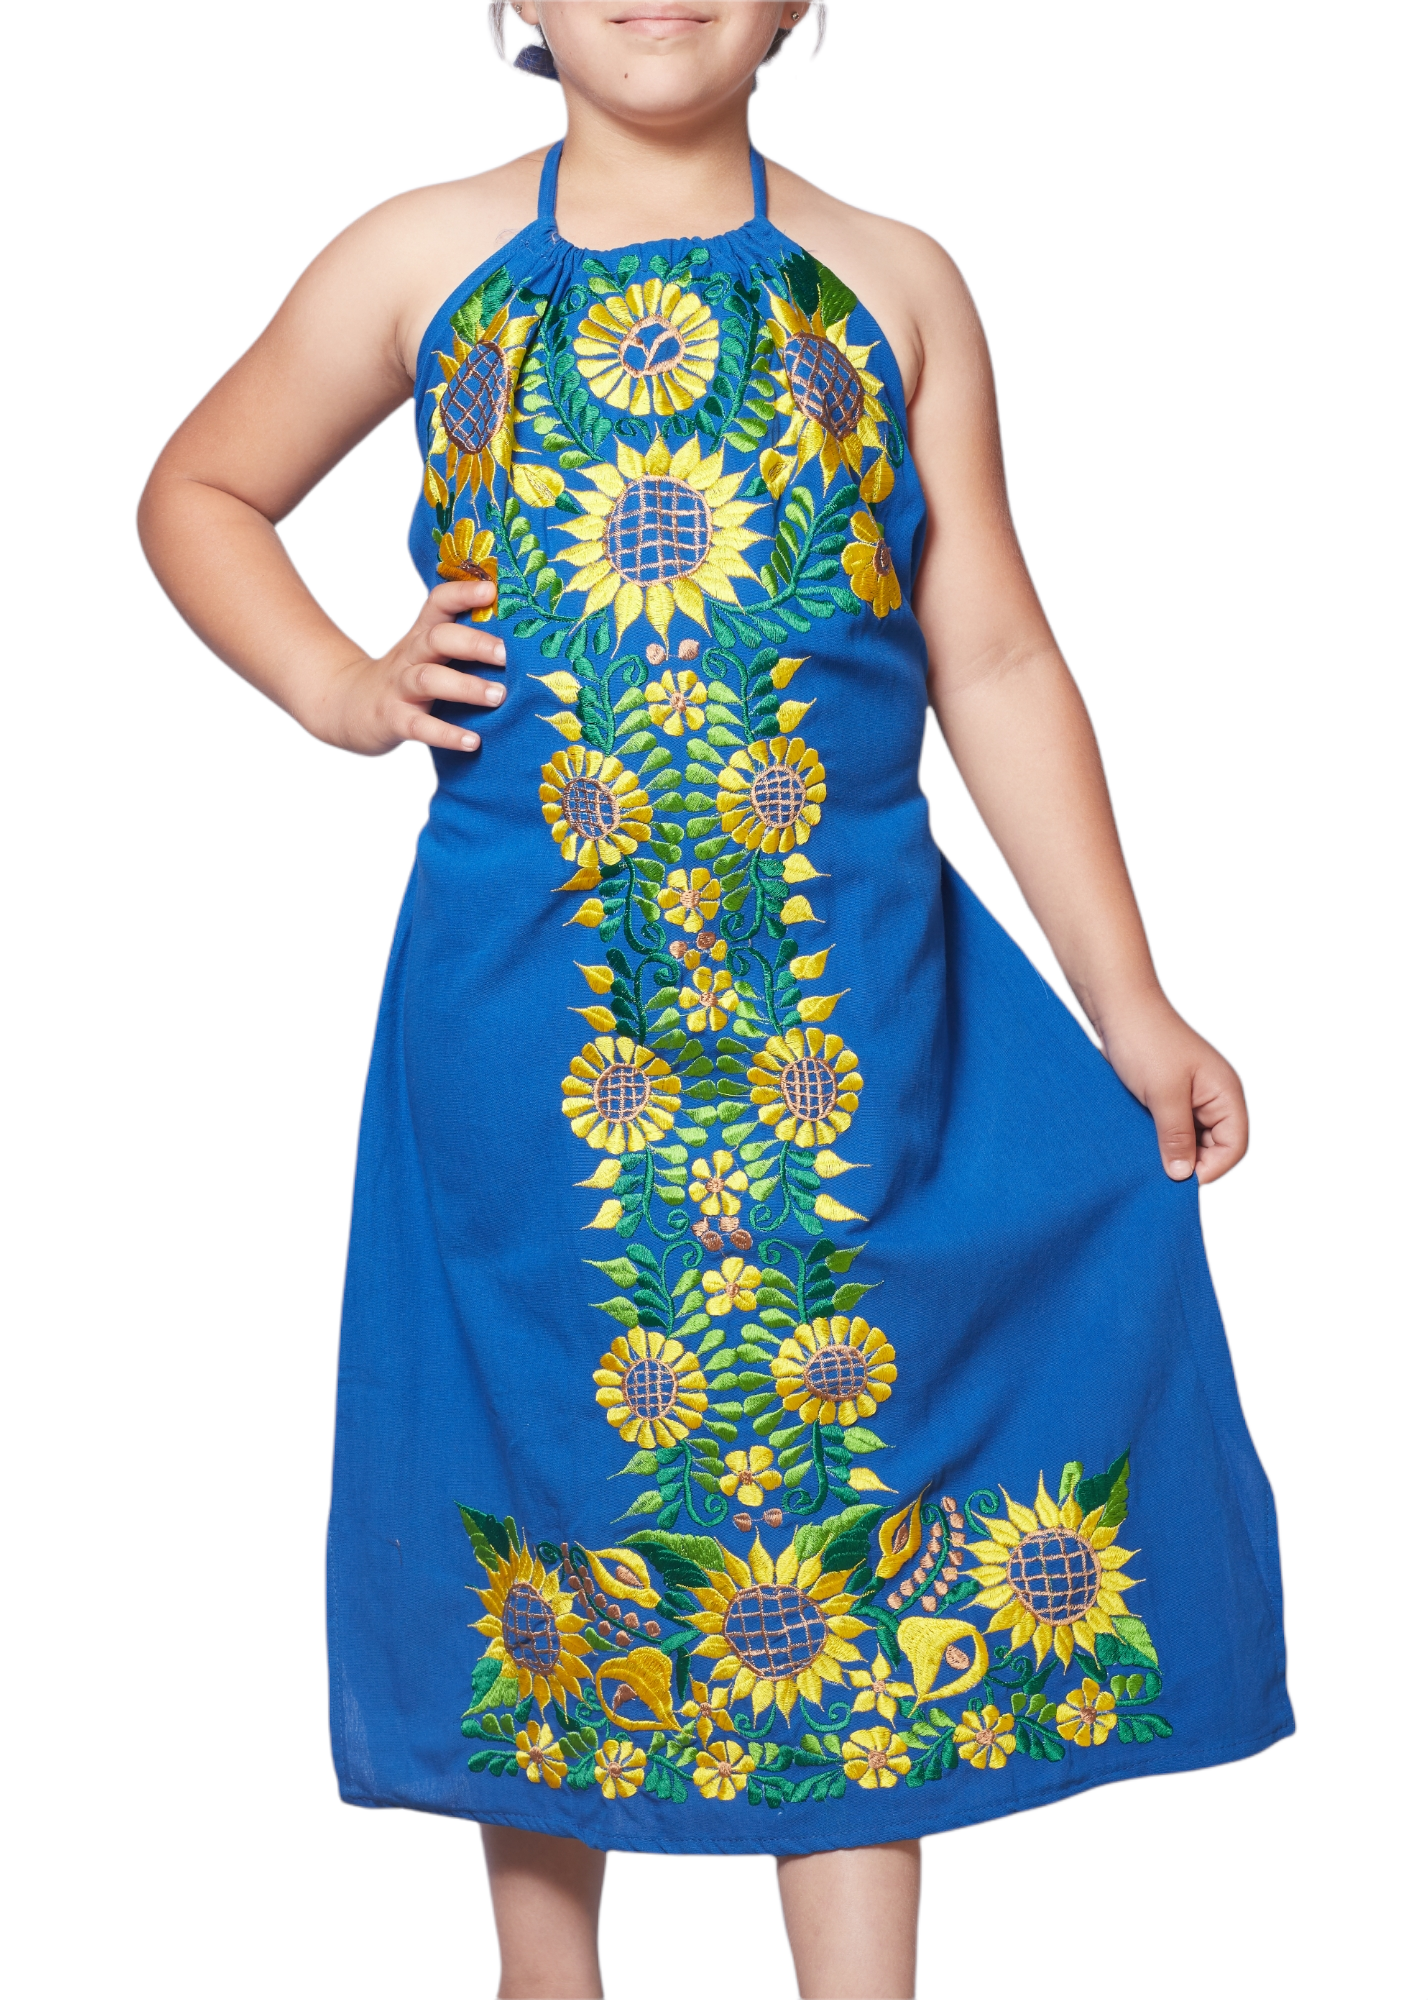 Sunflower halter dress